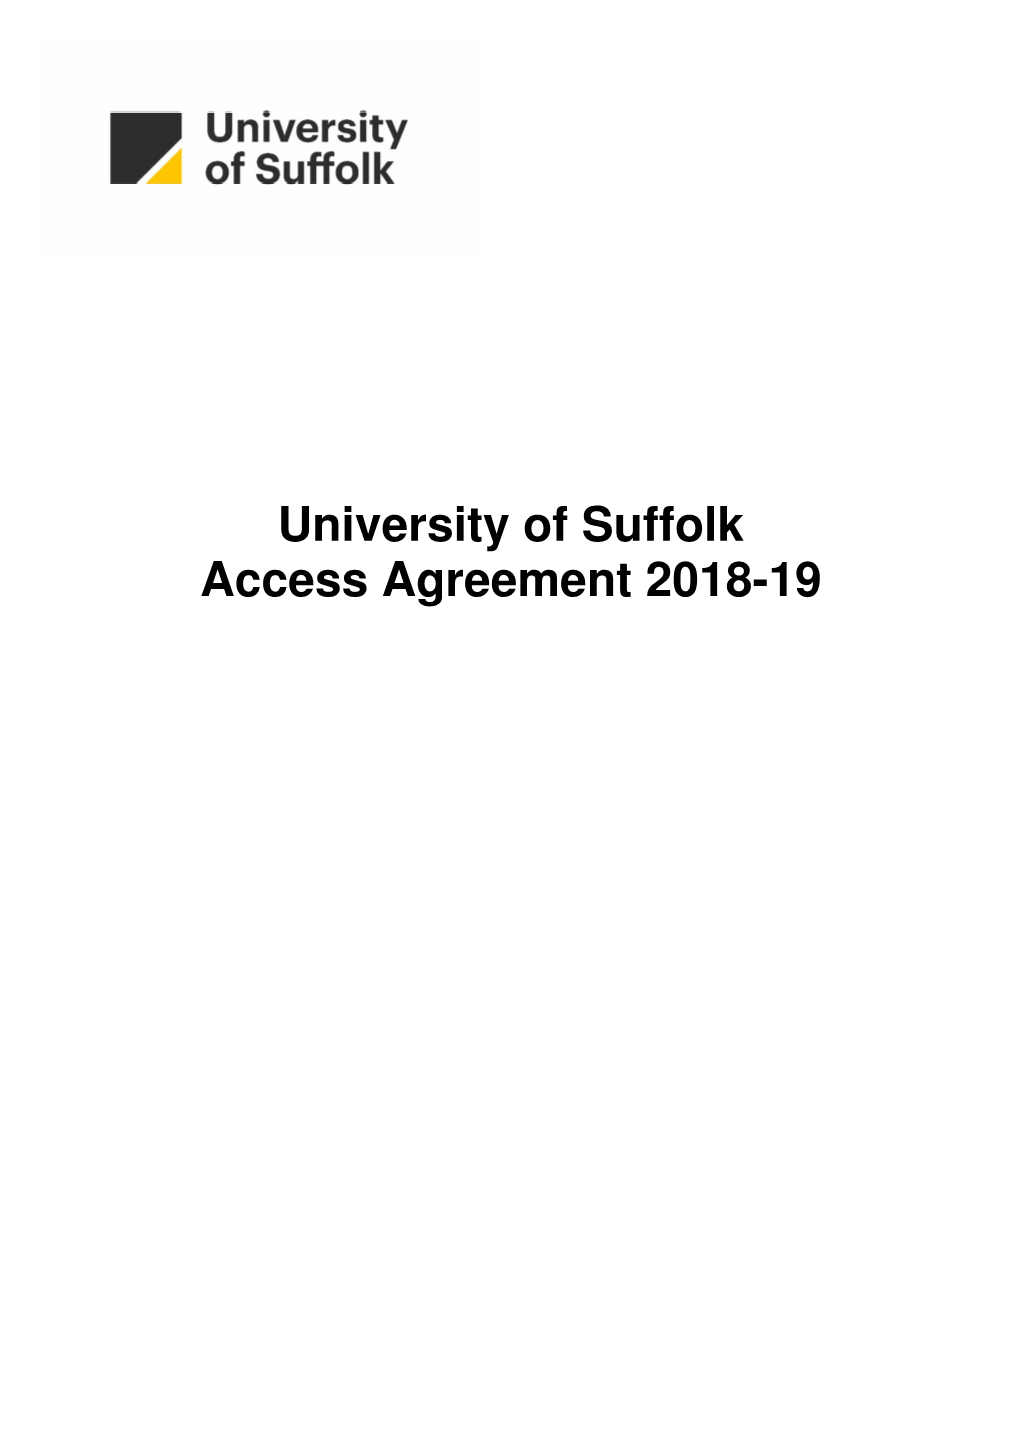 University of Suffolk Access Agreement 2018-19